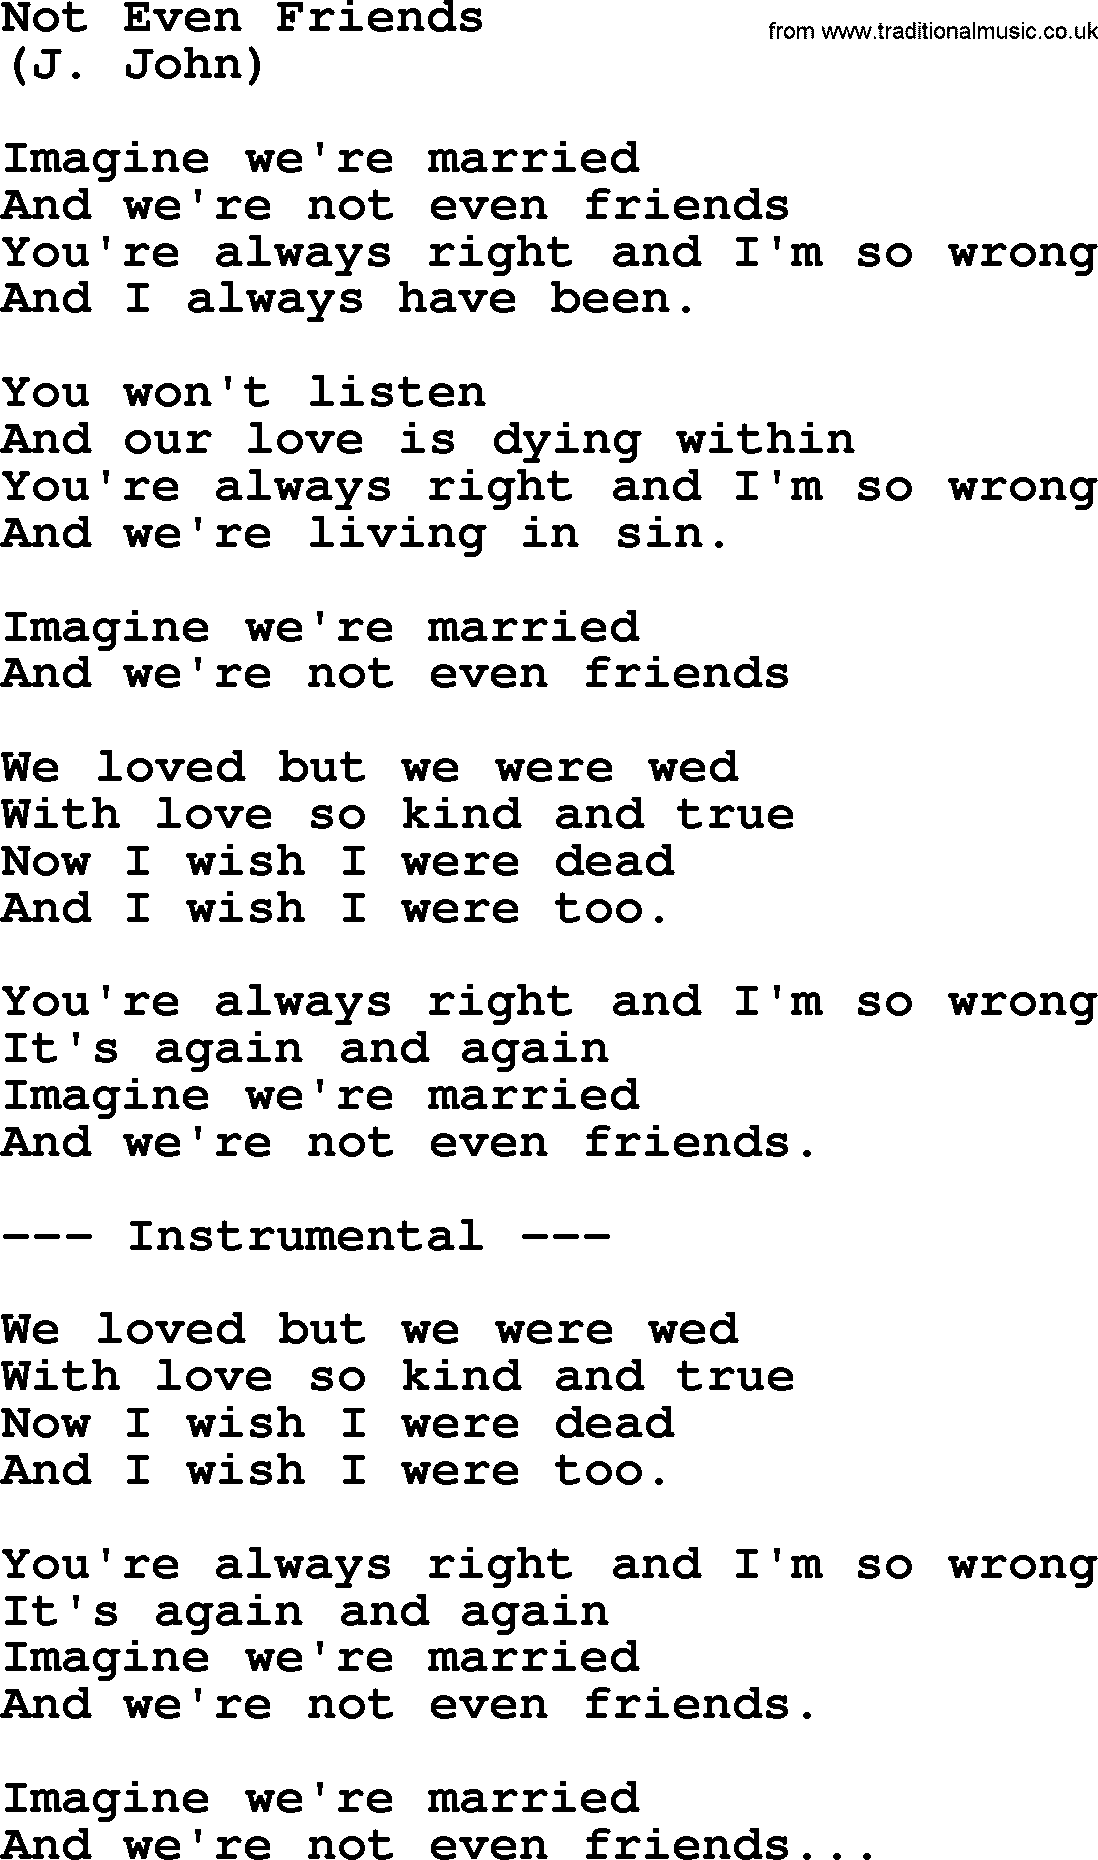 George Jones song: Not Even Friends, lyrics